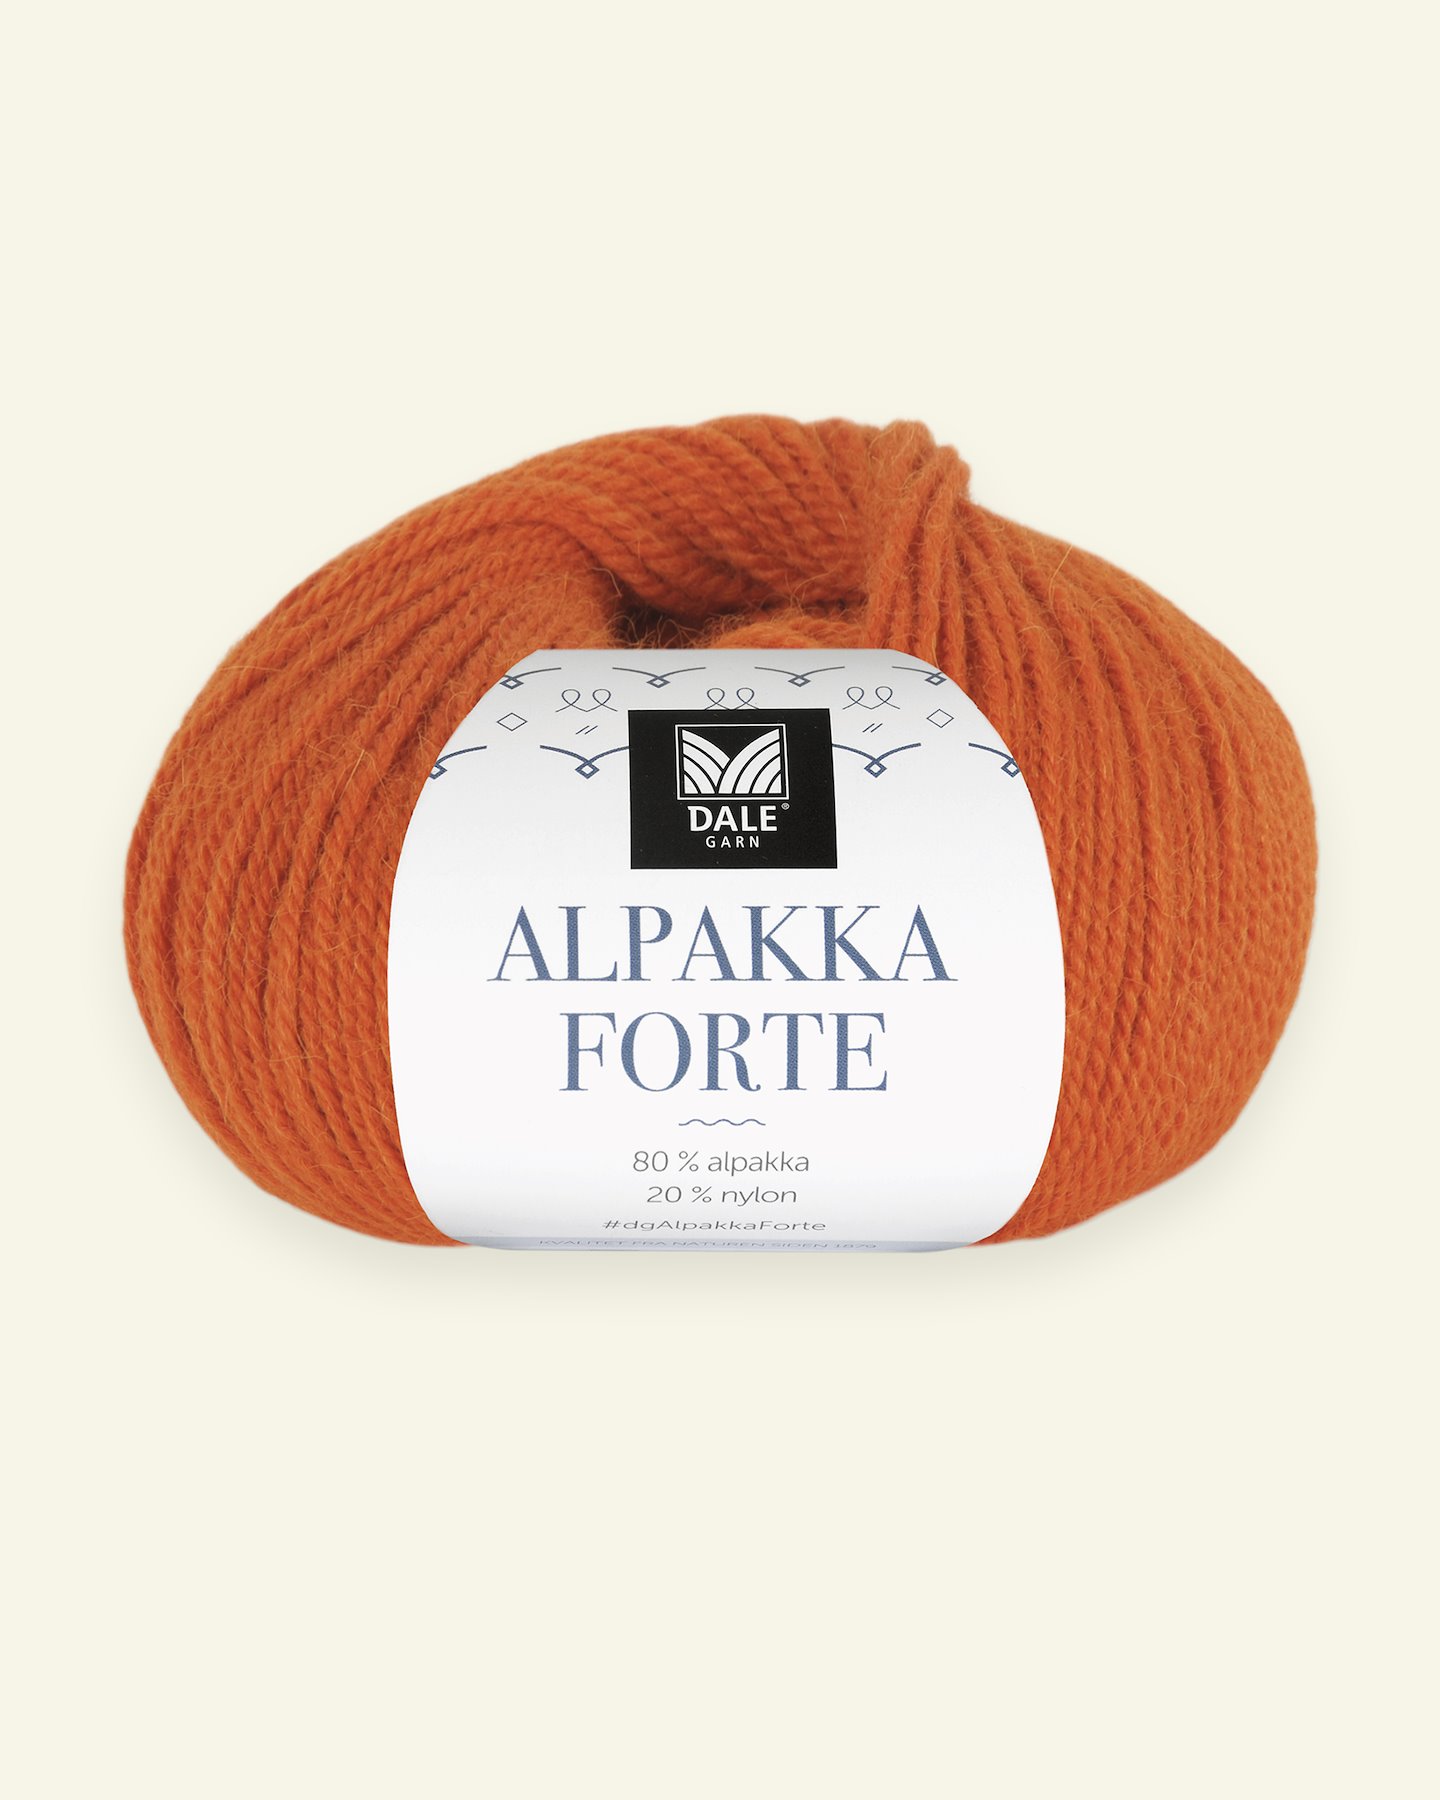 Dale Garn, Alpakawolle "Alpakka Forte", orange (740) 90000463_pack